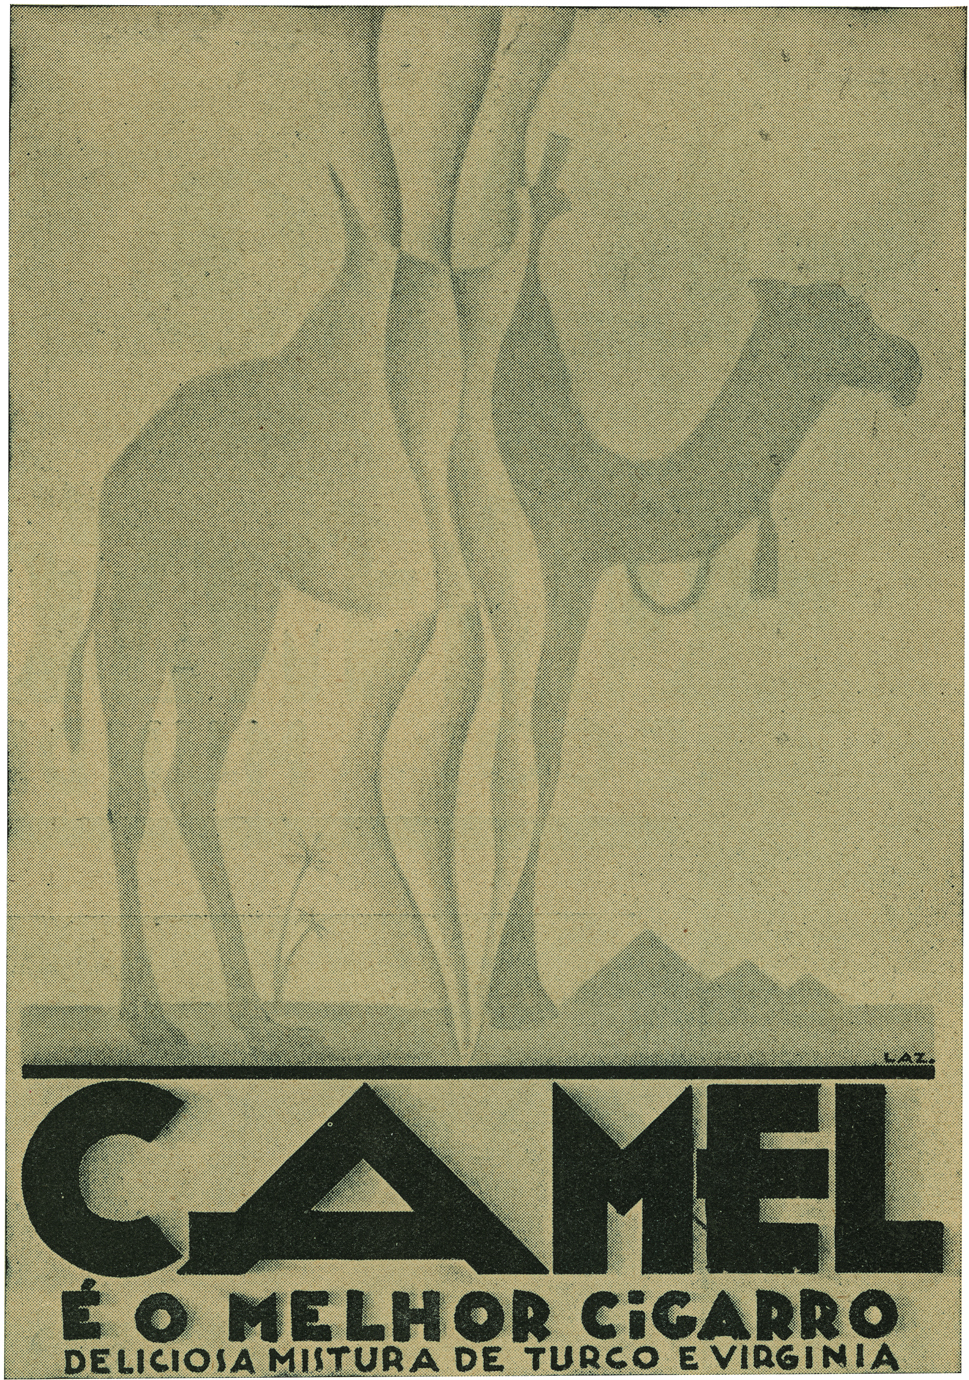 camel, 1, 15 abr 1930